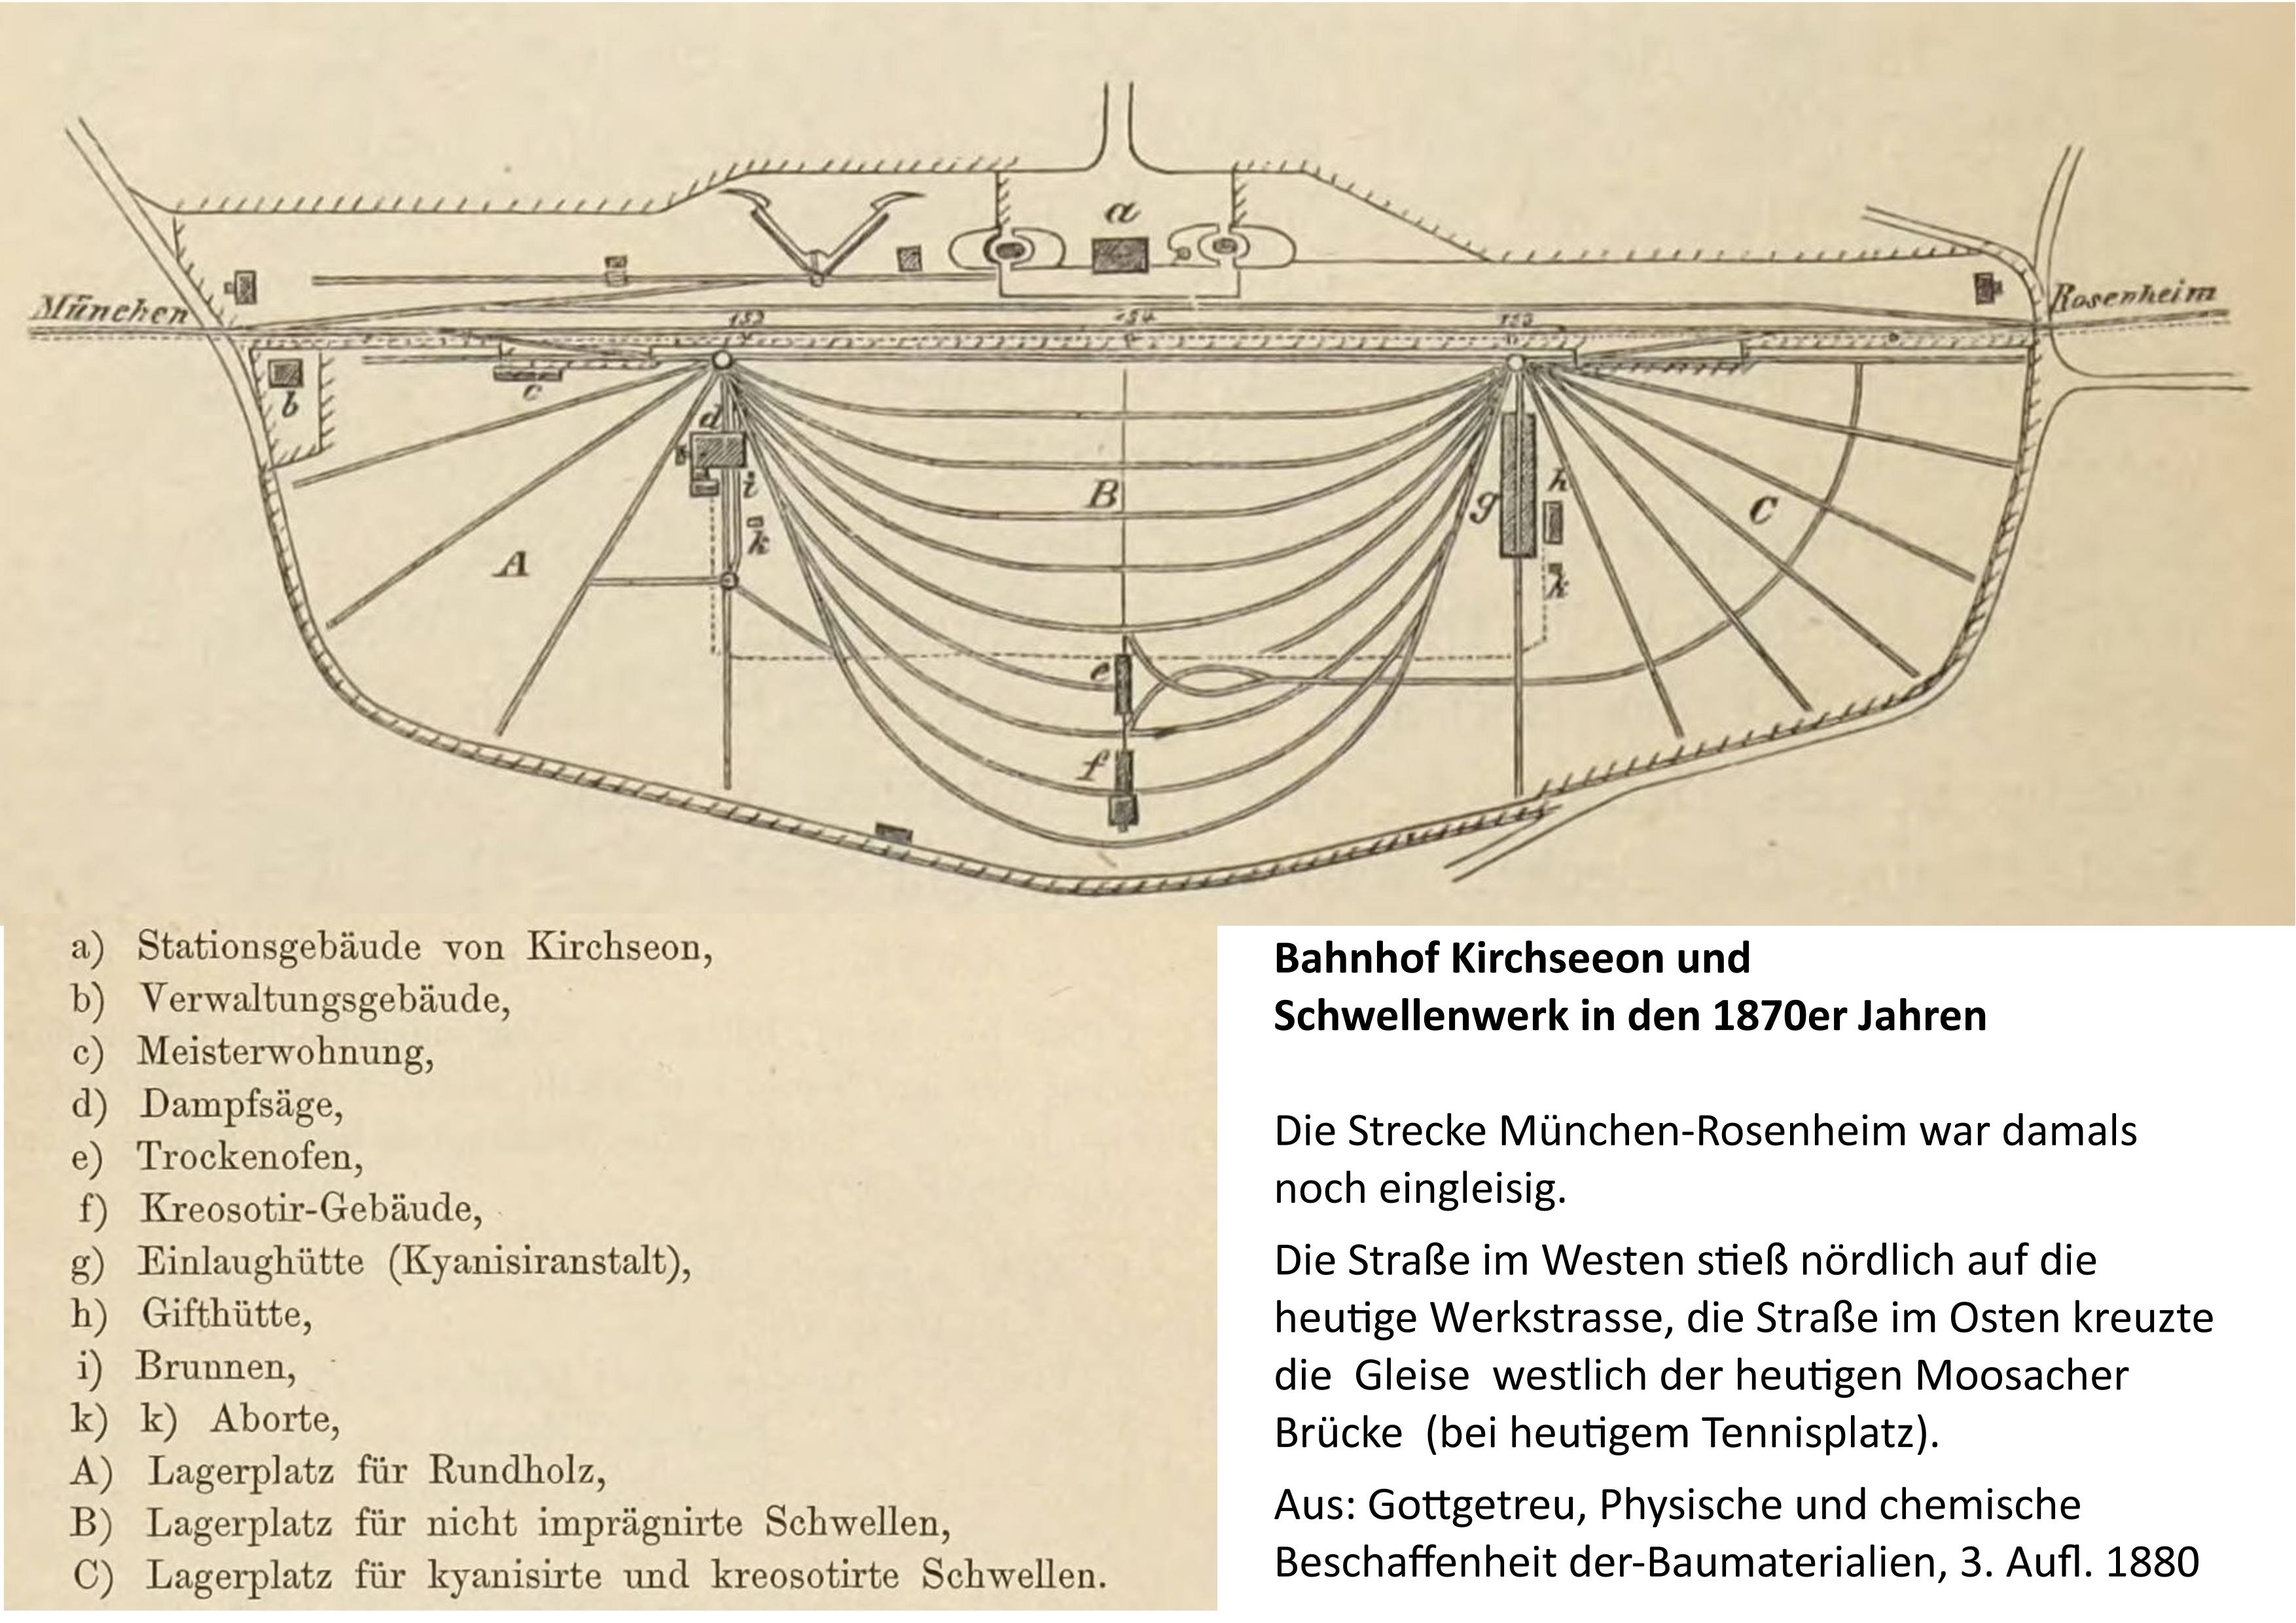 Schwellenwerk Kirchseeon - 1870-1880 - nach Gottgetreu